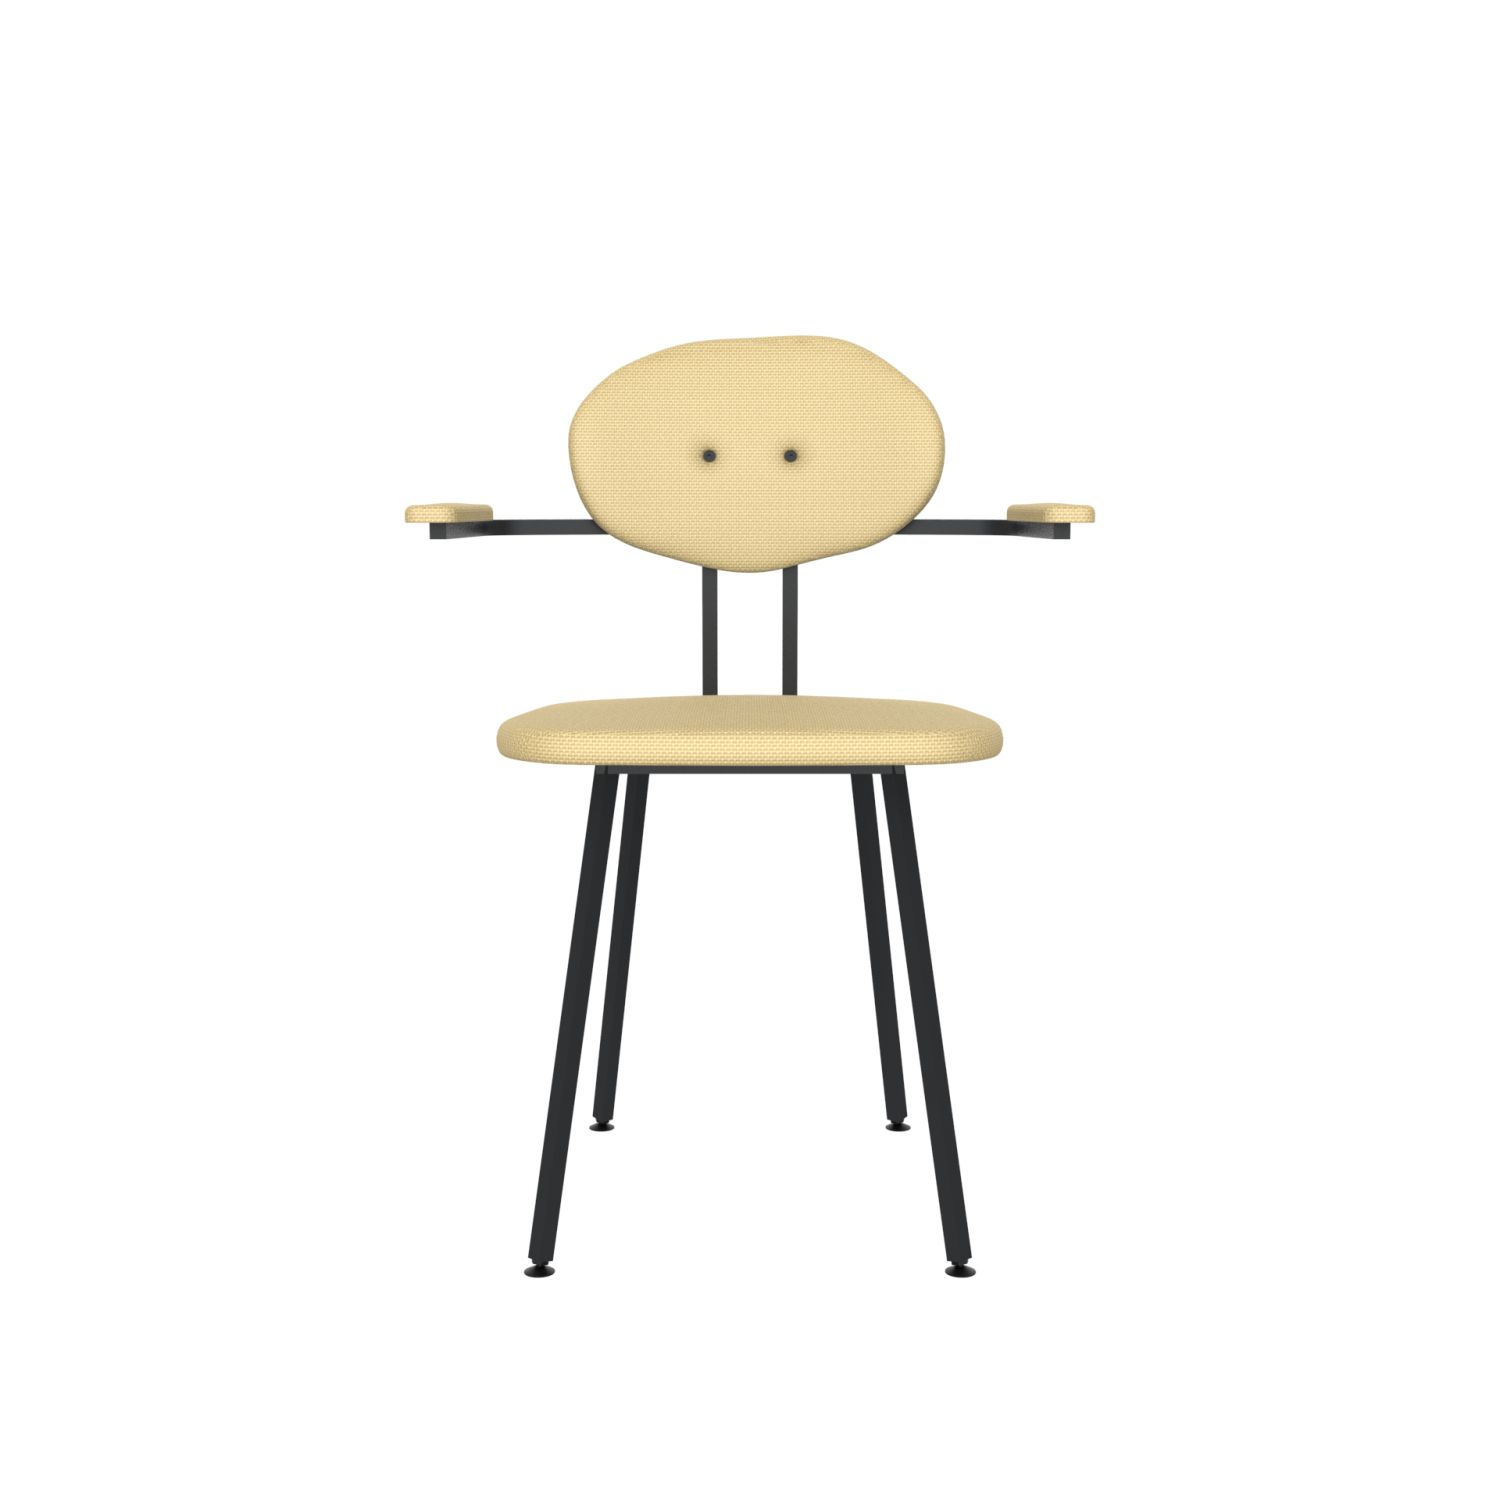 lensvelt maarten baas chair 102 not stackable with armrests backrest d light brown 141 black ral9005 hard leg ends